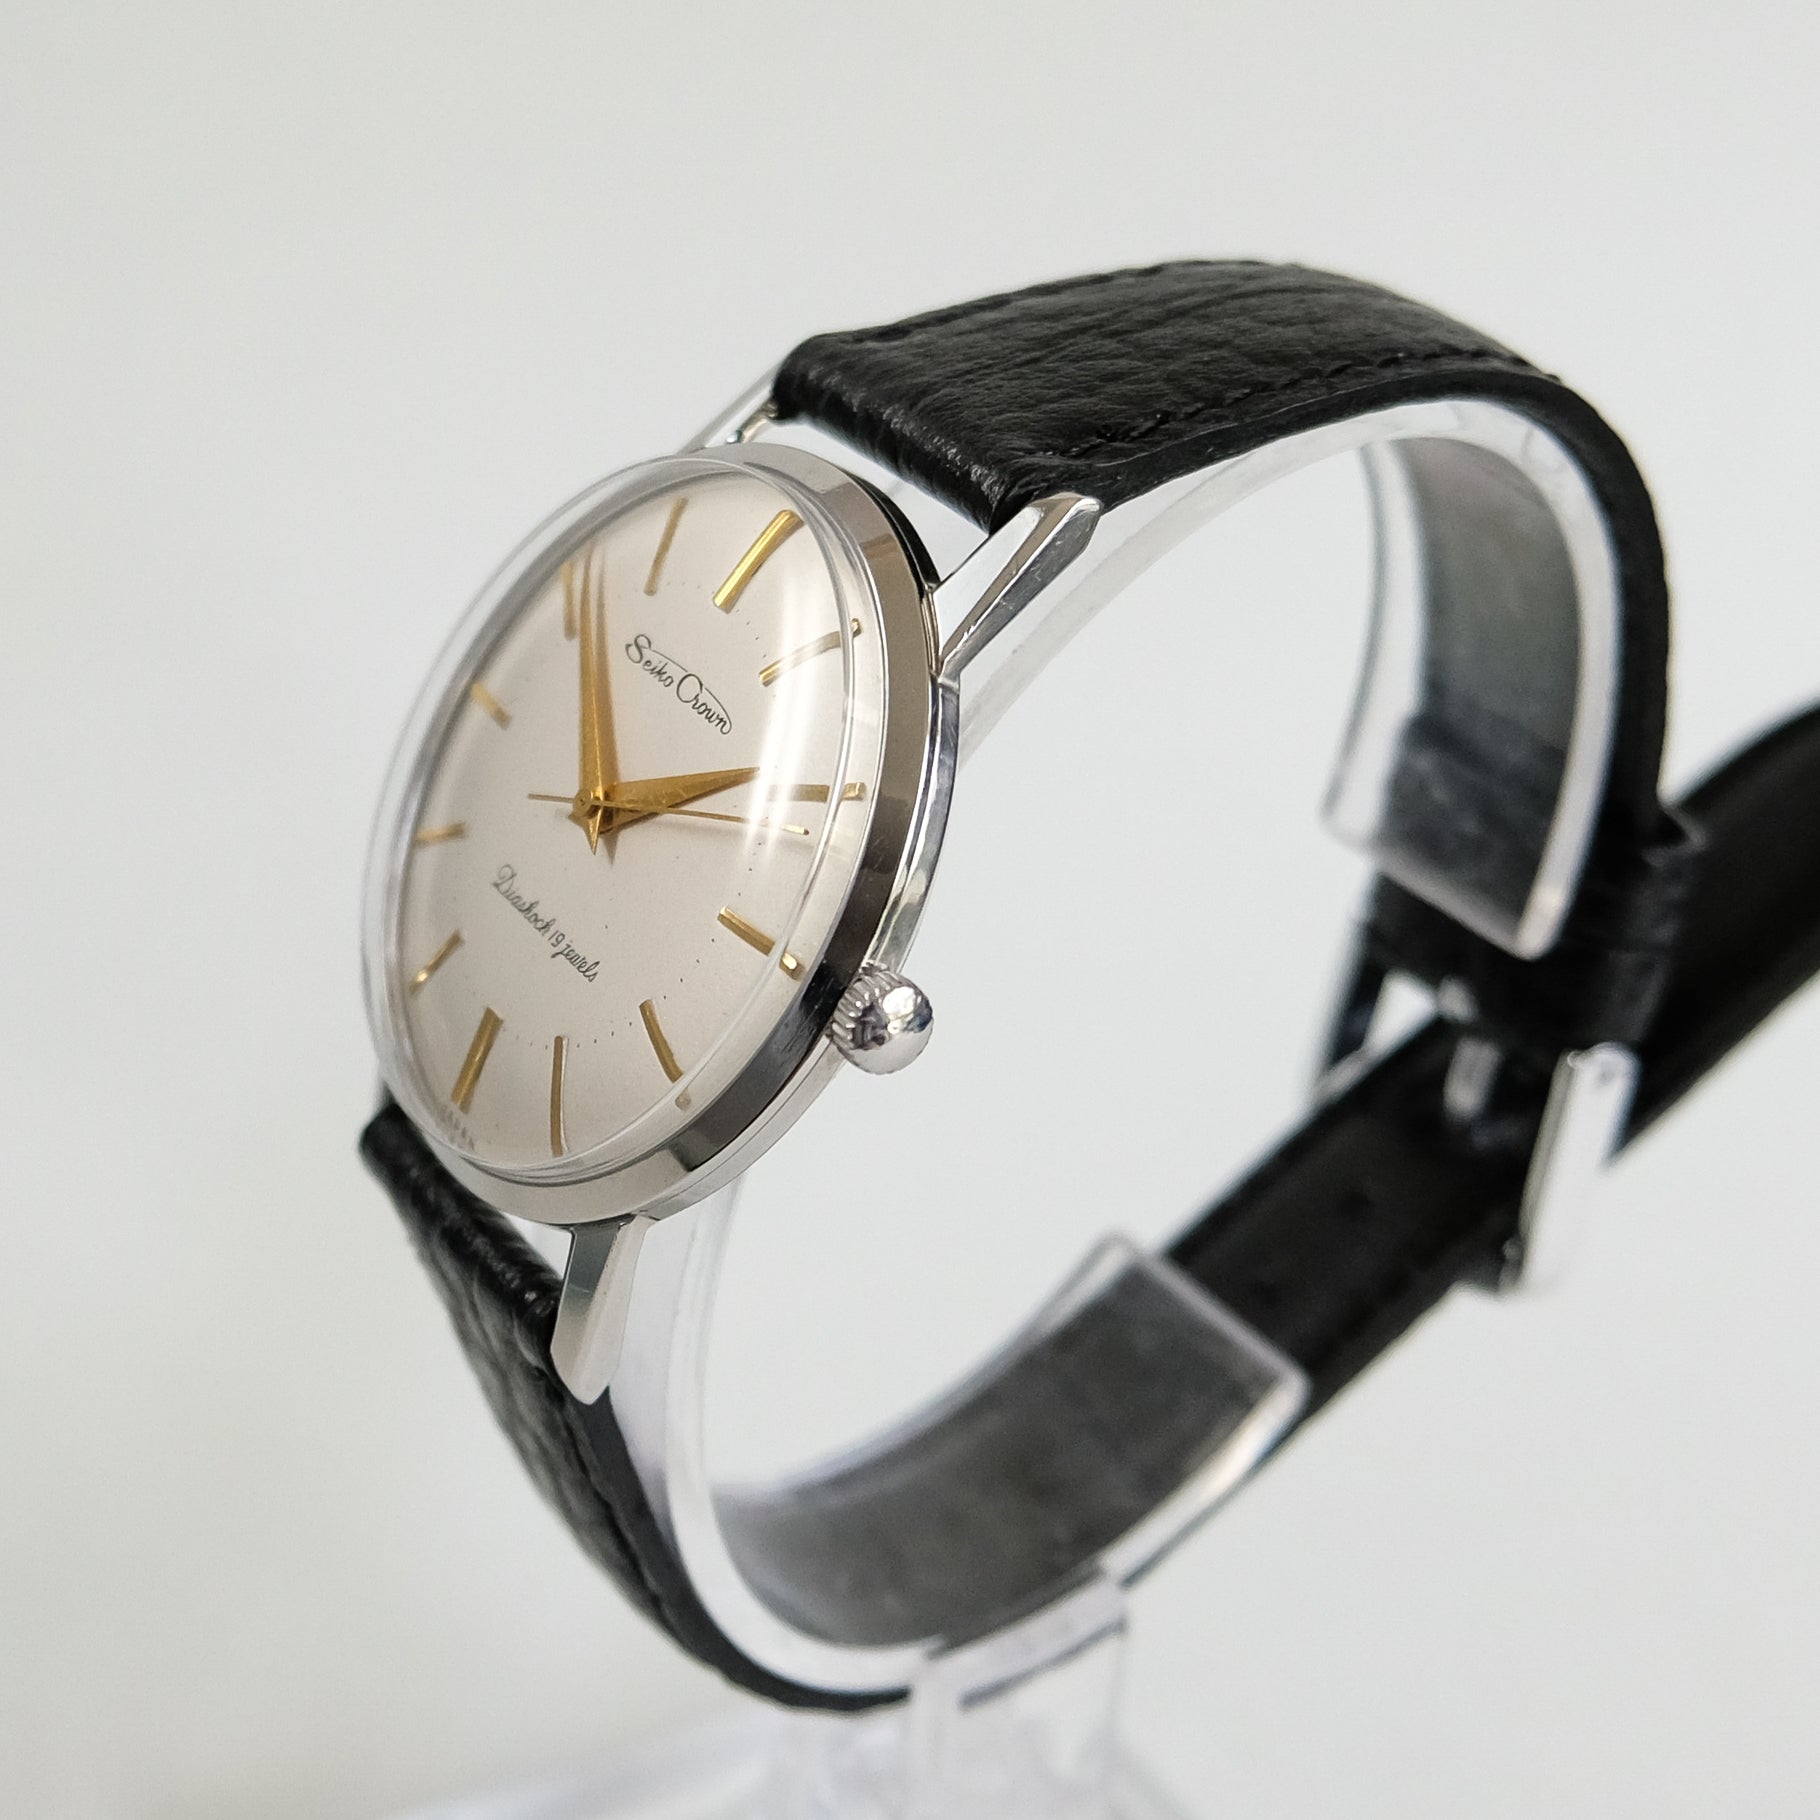 SEIKO セイコー クラウン 初期文字盤 J14043 純正ベルト 稼働 未整備品 - ブランド腕時計